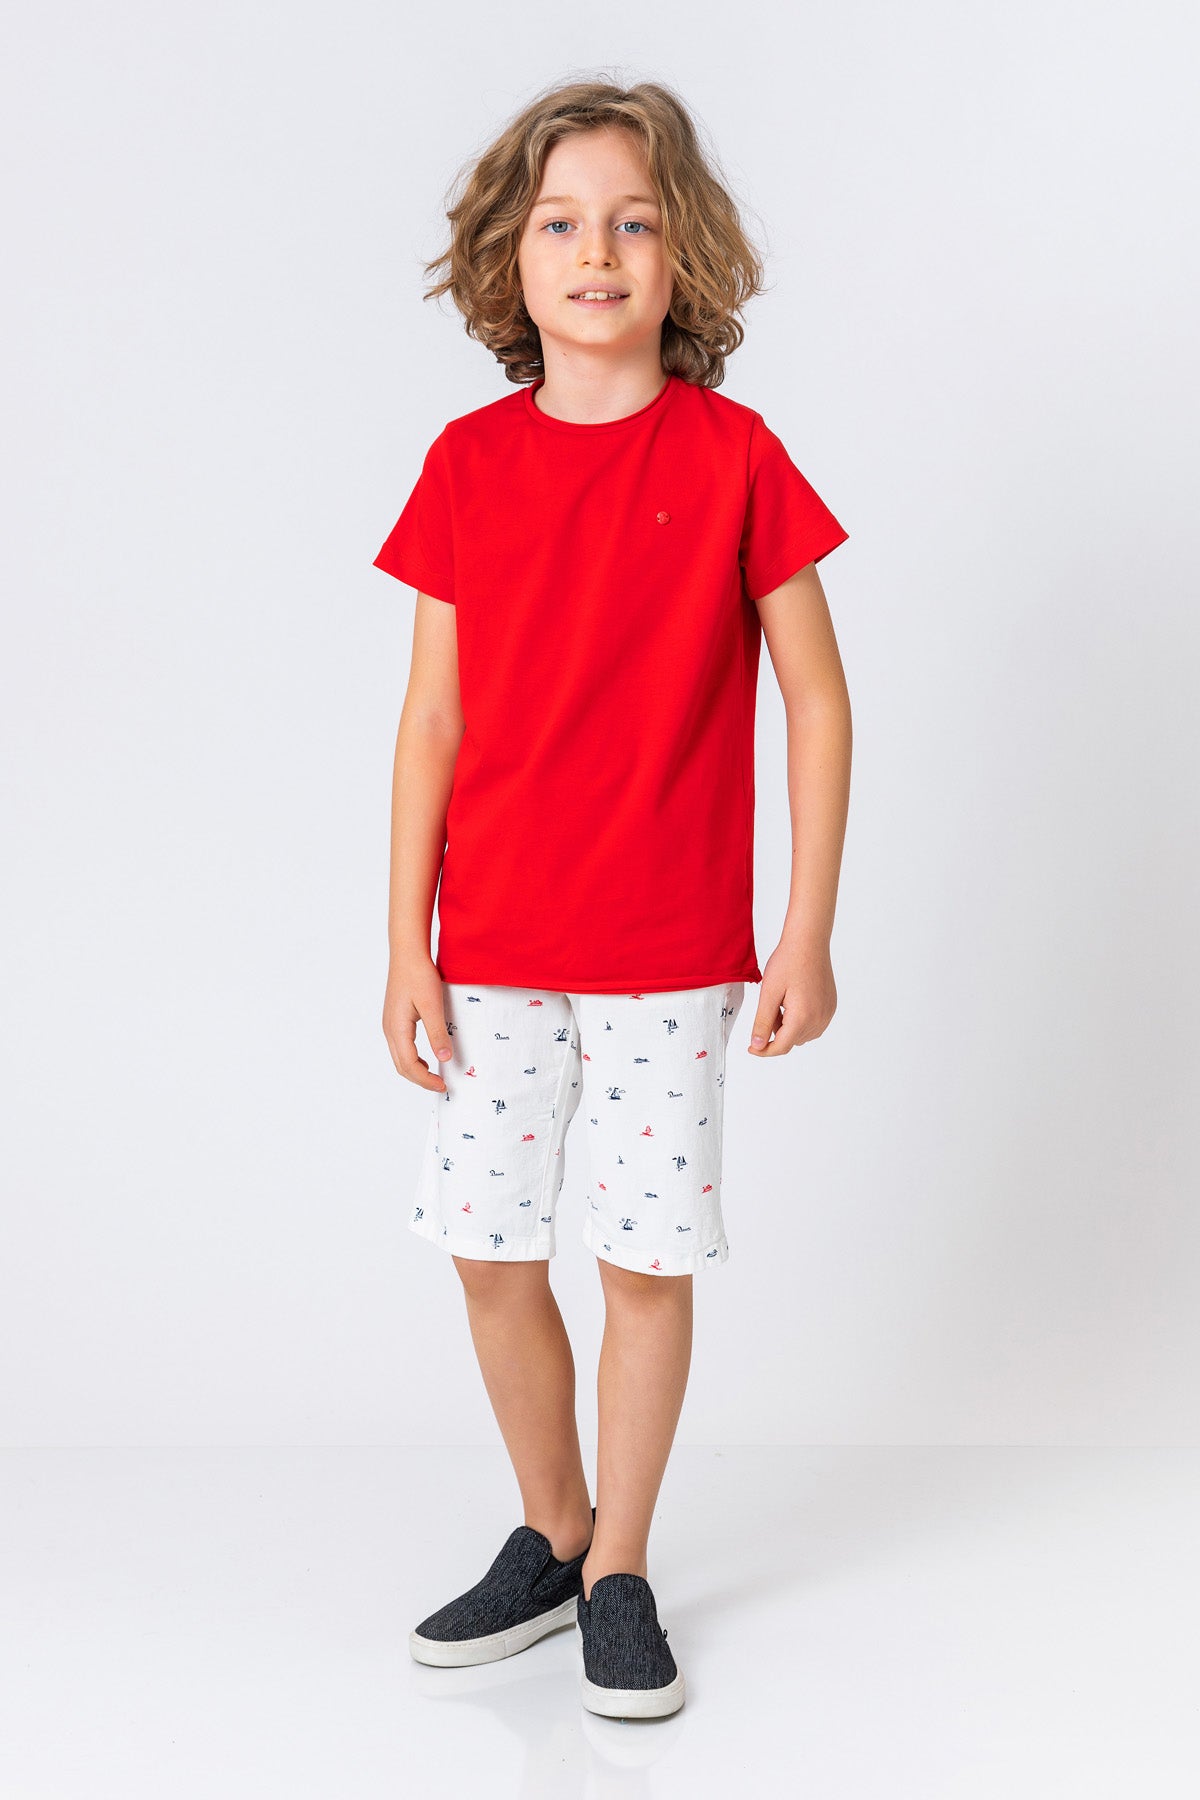 Sleeve Short Kids Round InCity Solid Plain Neck T-Shirt Boys Basic